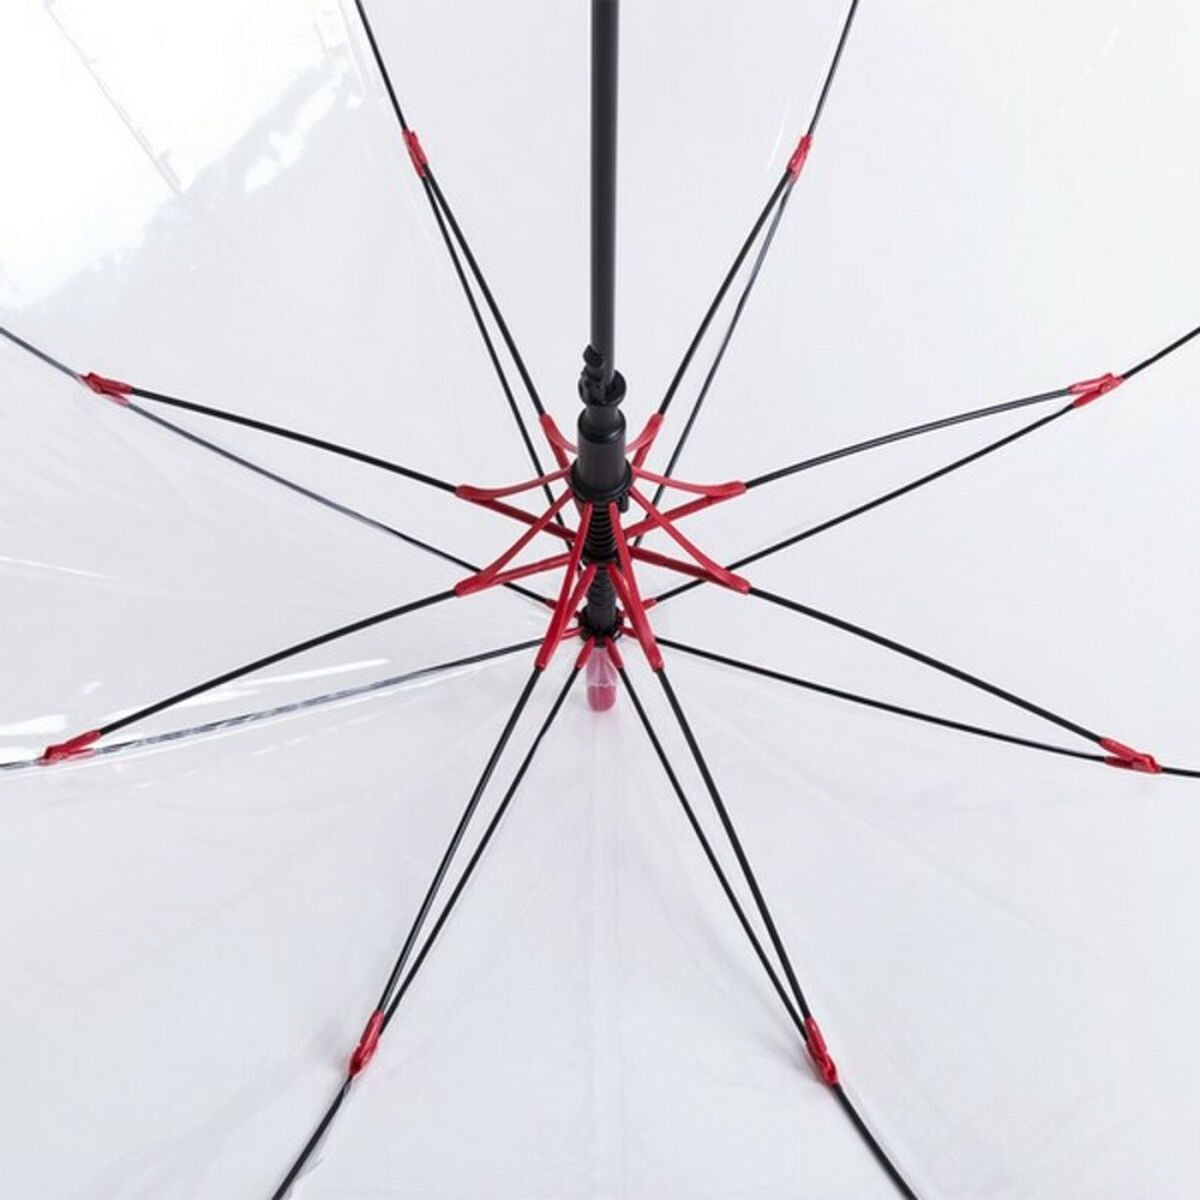 Automatiskt paraply 145988 (Ø 100 cm)